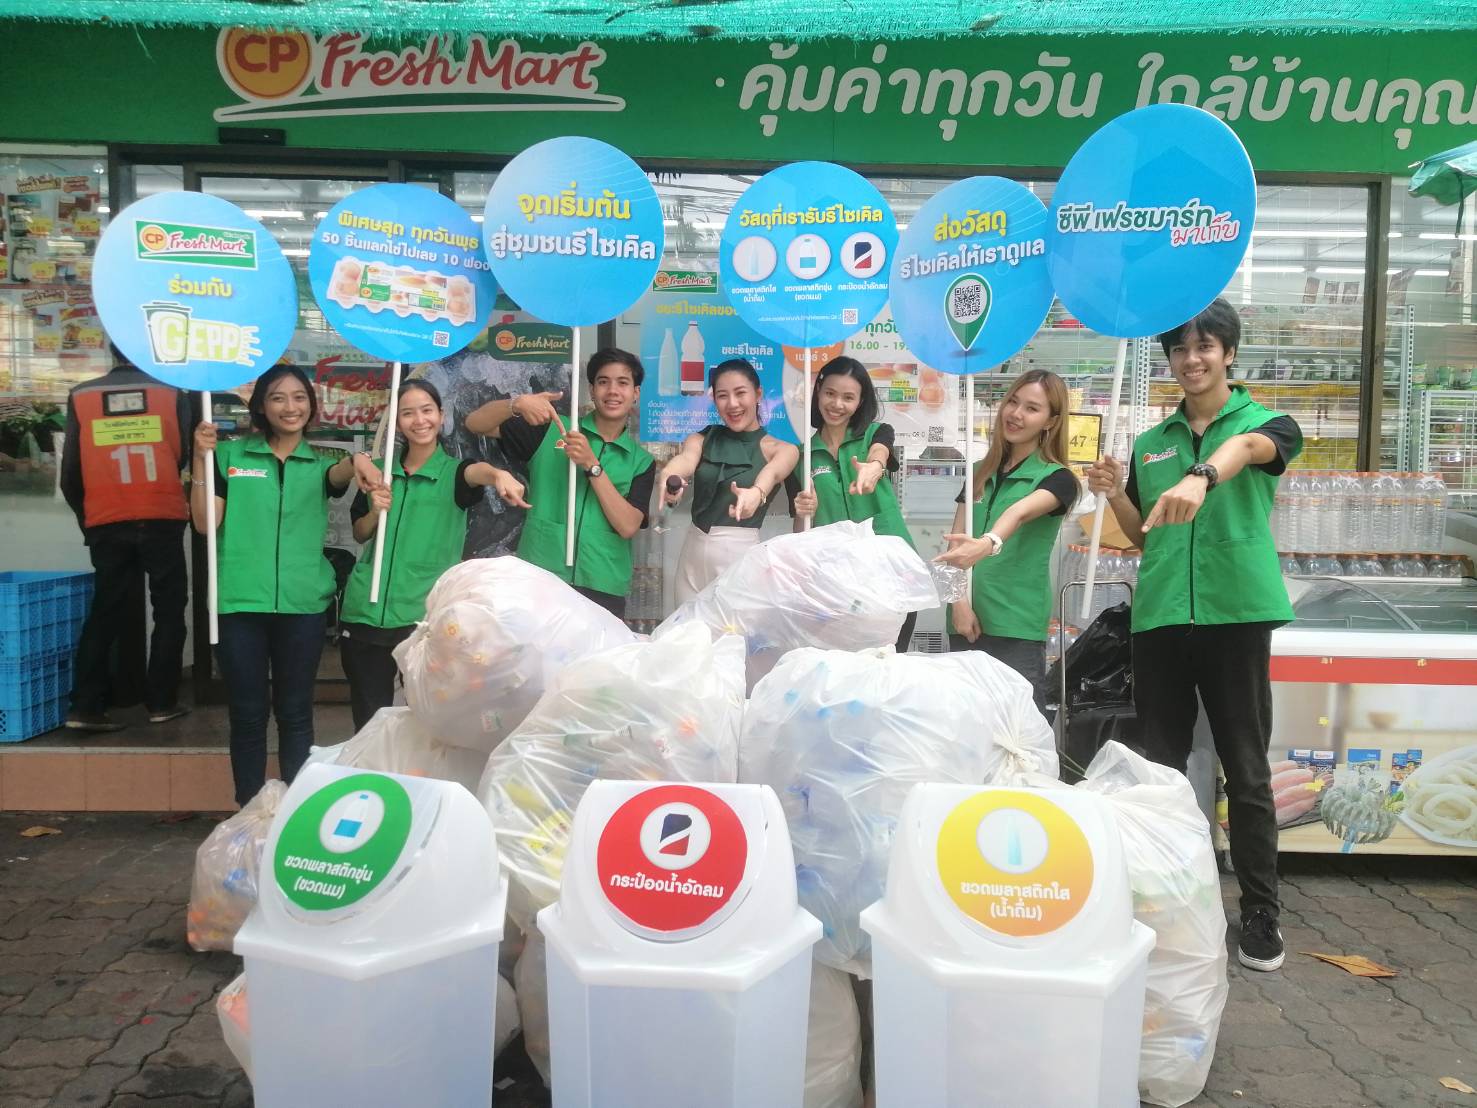 “CP Fresh Mart มาเก็บ” ชวนคนไทยแยกขยะ แลกไข่ไก่ สร้างพฤติกรรมรักษ์โลก